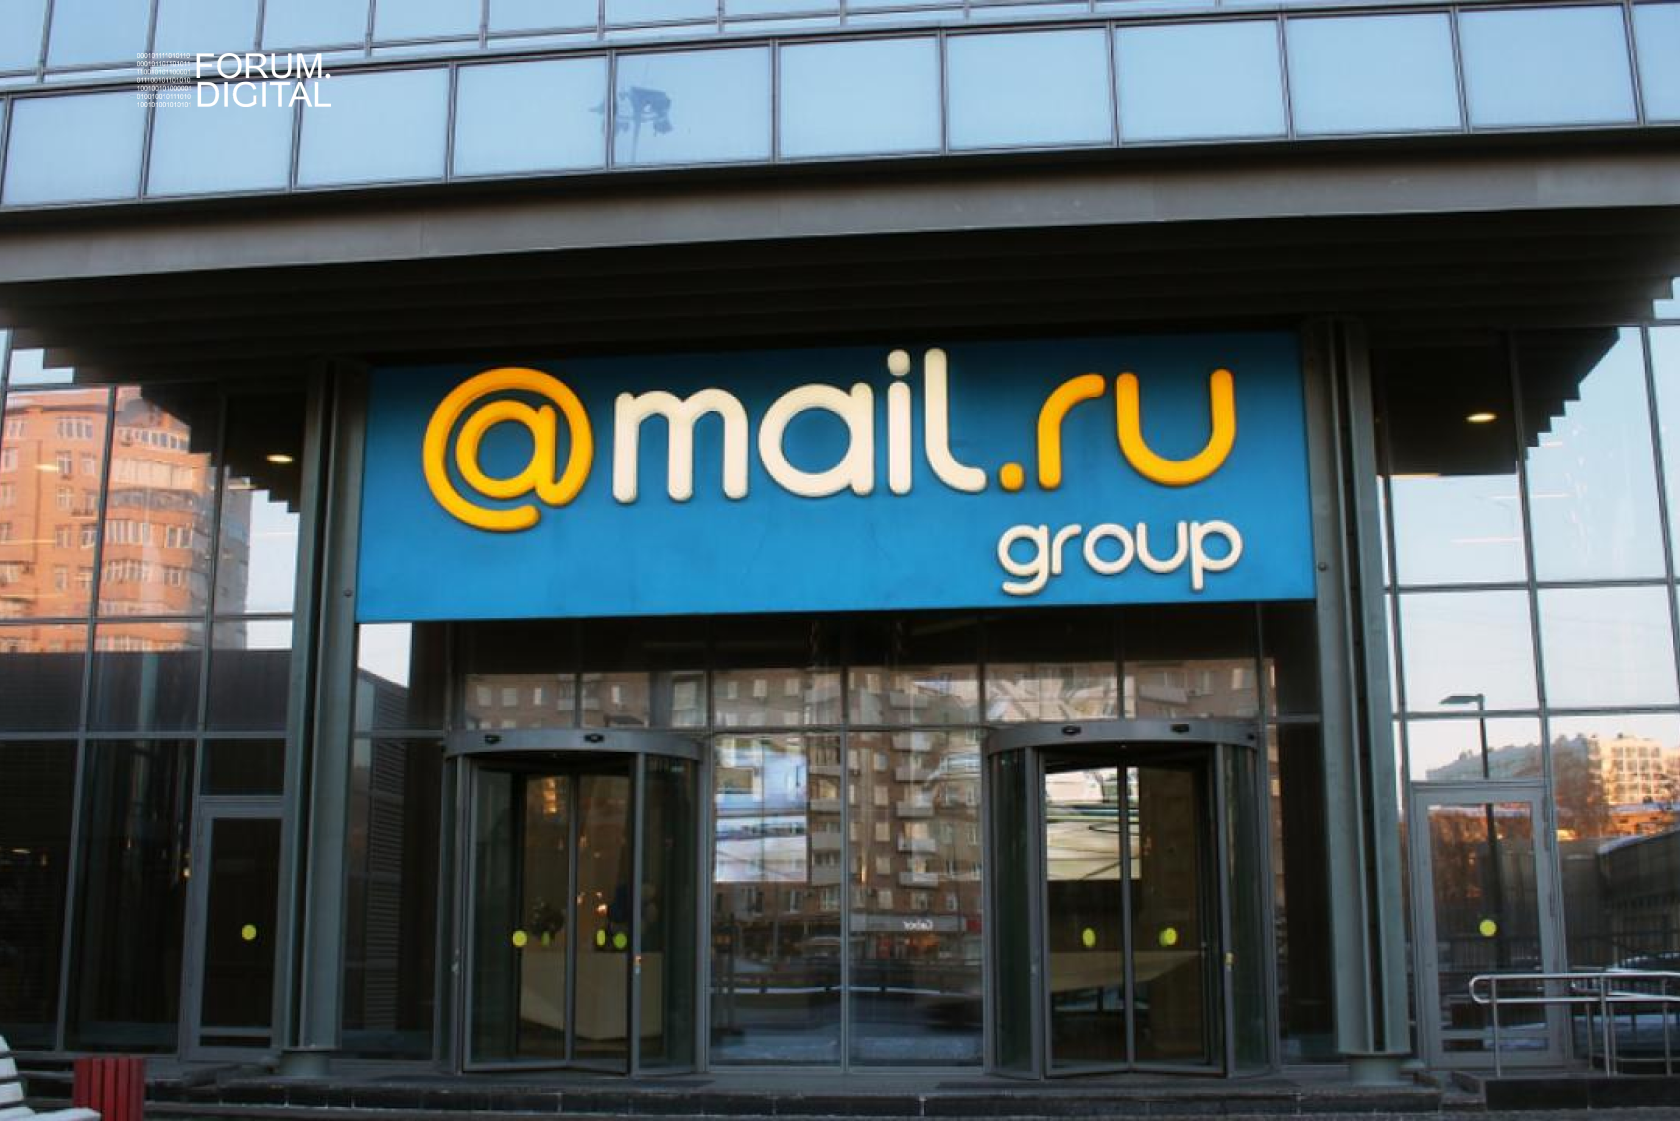 Mail ru адрес офиса. Офис mail.ru. Mail Group офис. Mail Group офис в Москве. Офис маил в Москве.